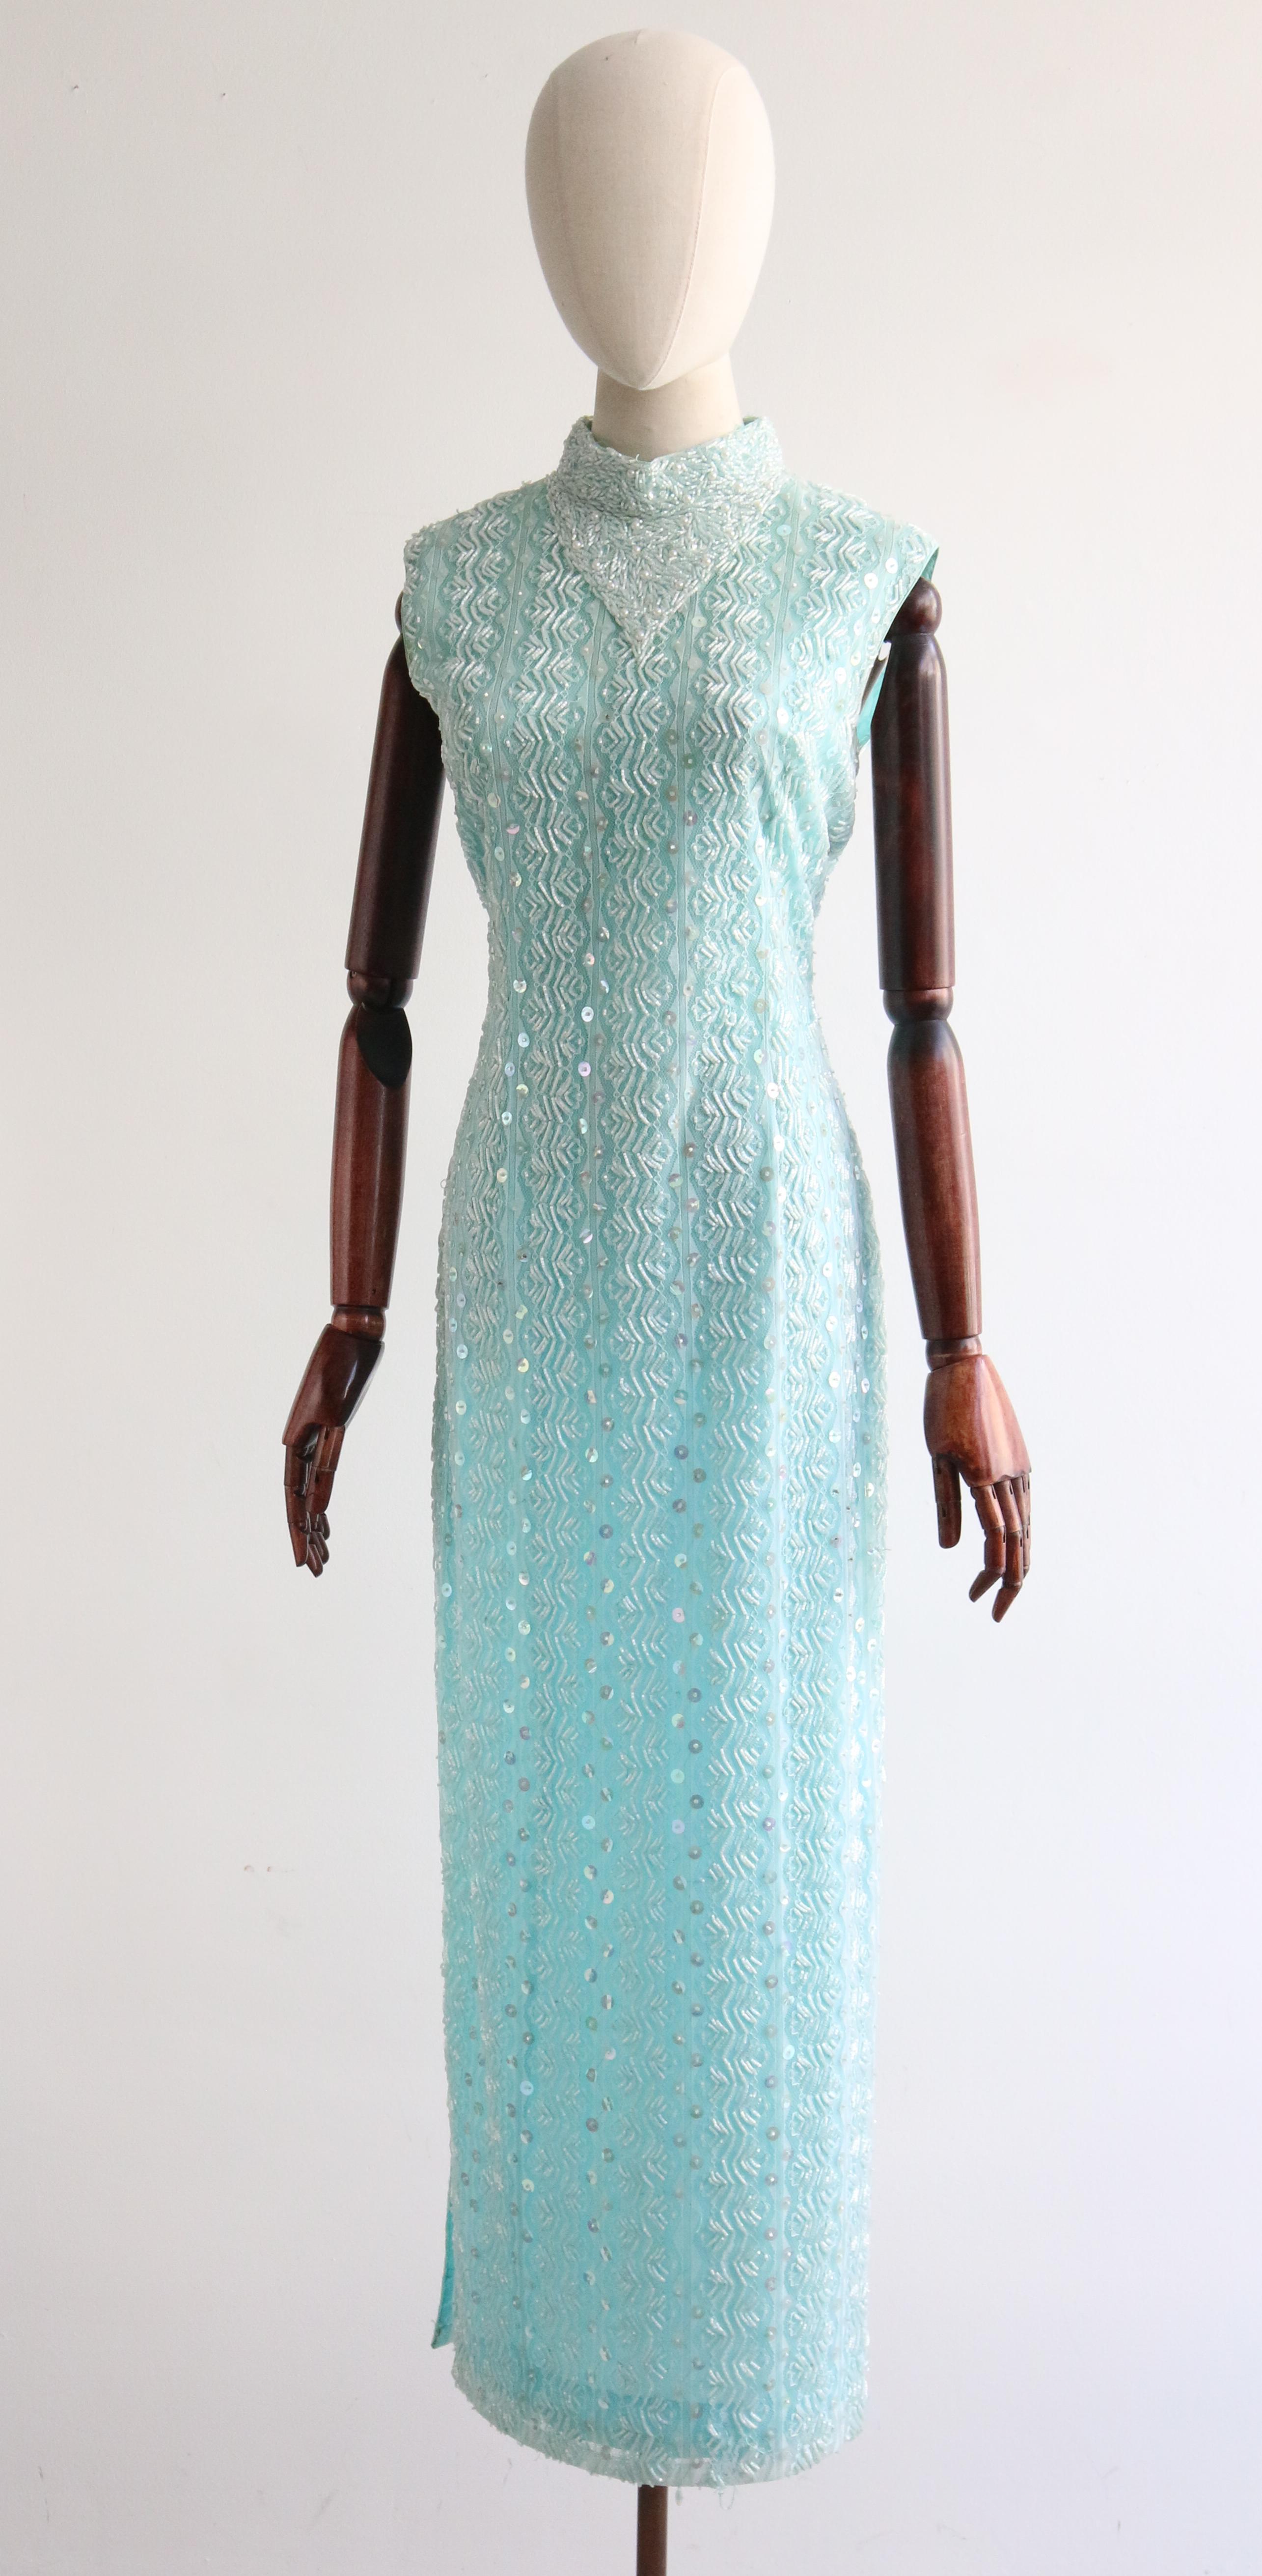 Vintage 1960's Aqua Beaded Lace Dress UK 10-12 US 6-8 For Sale 2